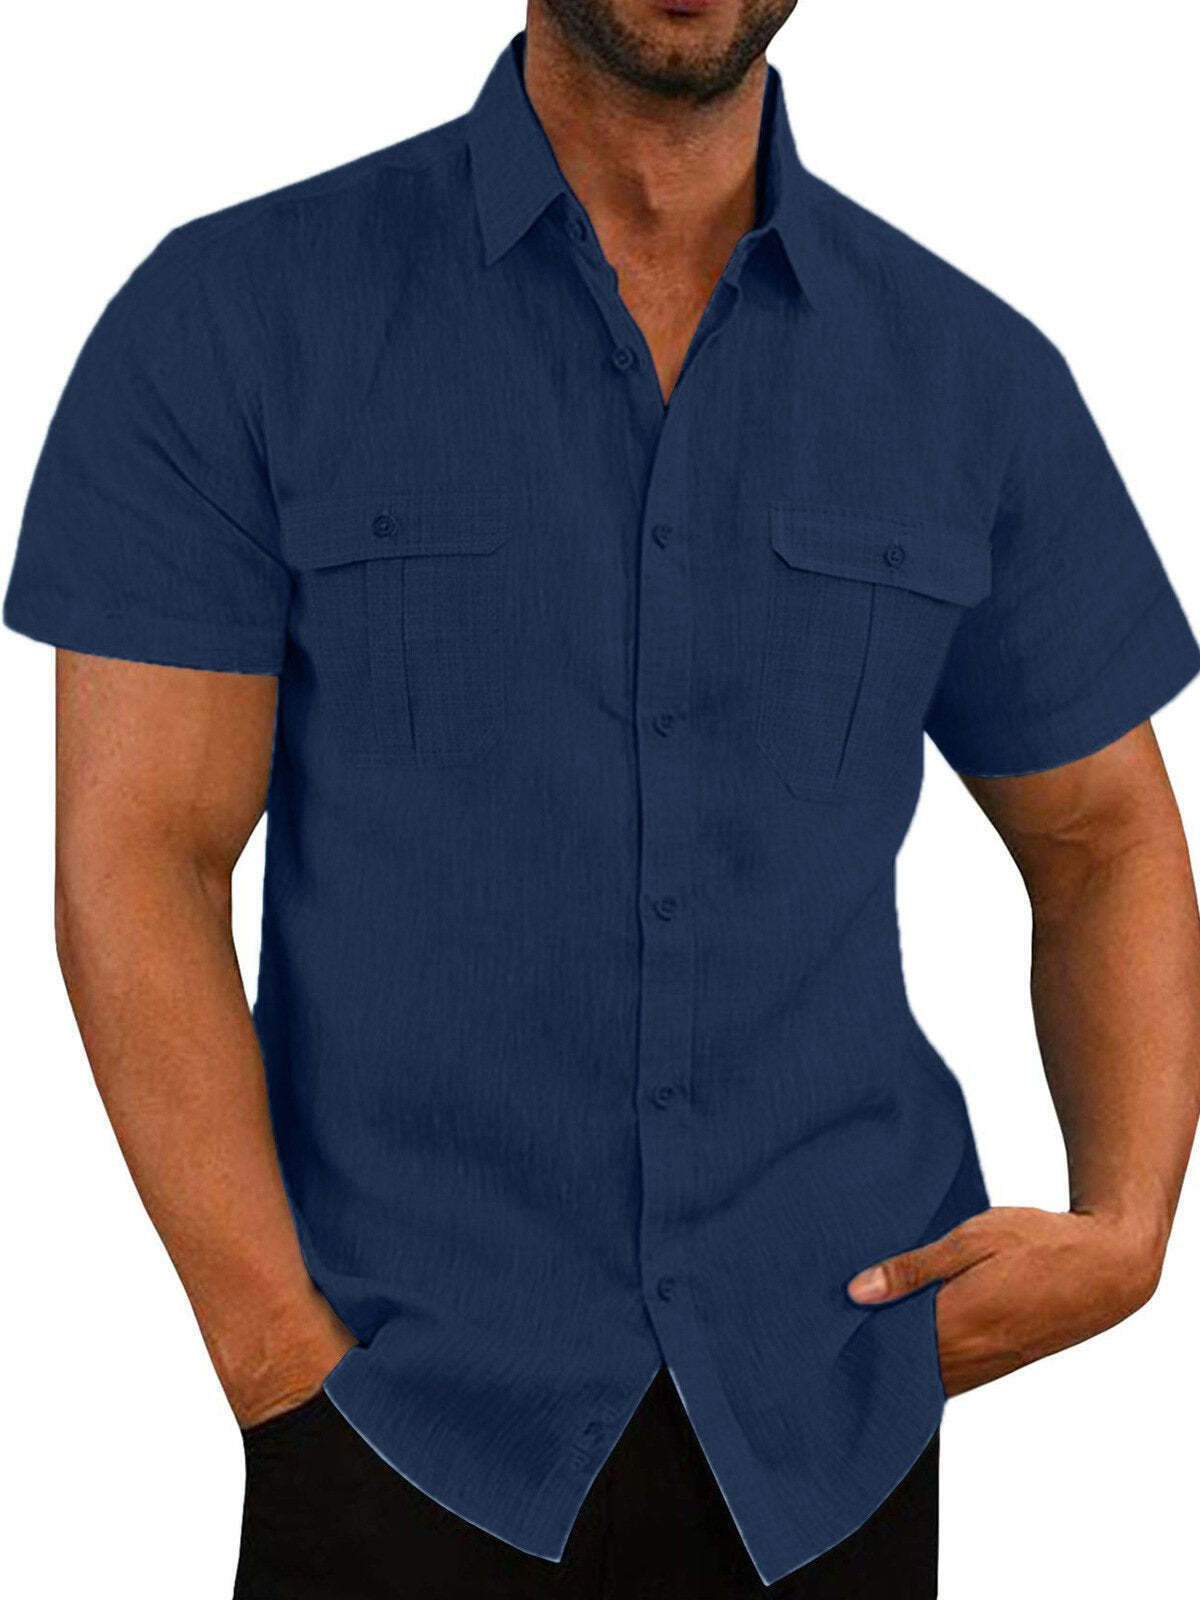 7-Pack Men's Shirts Double Pocket Cotton Linen Short Sleeve Shirts Cas ...